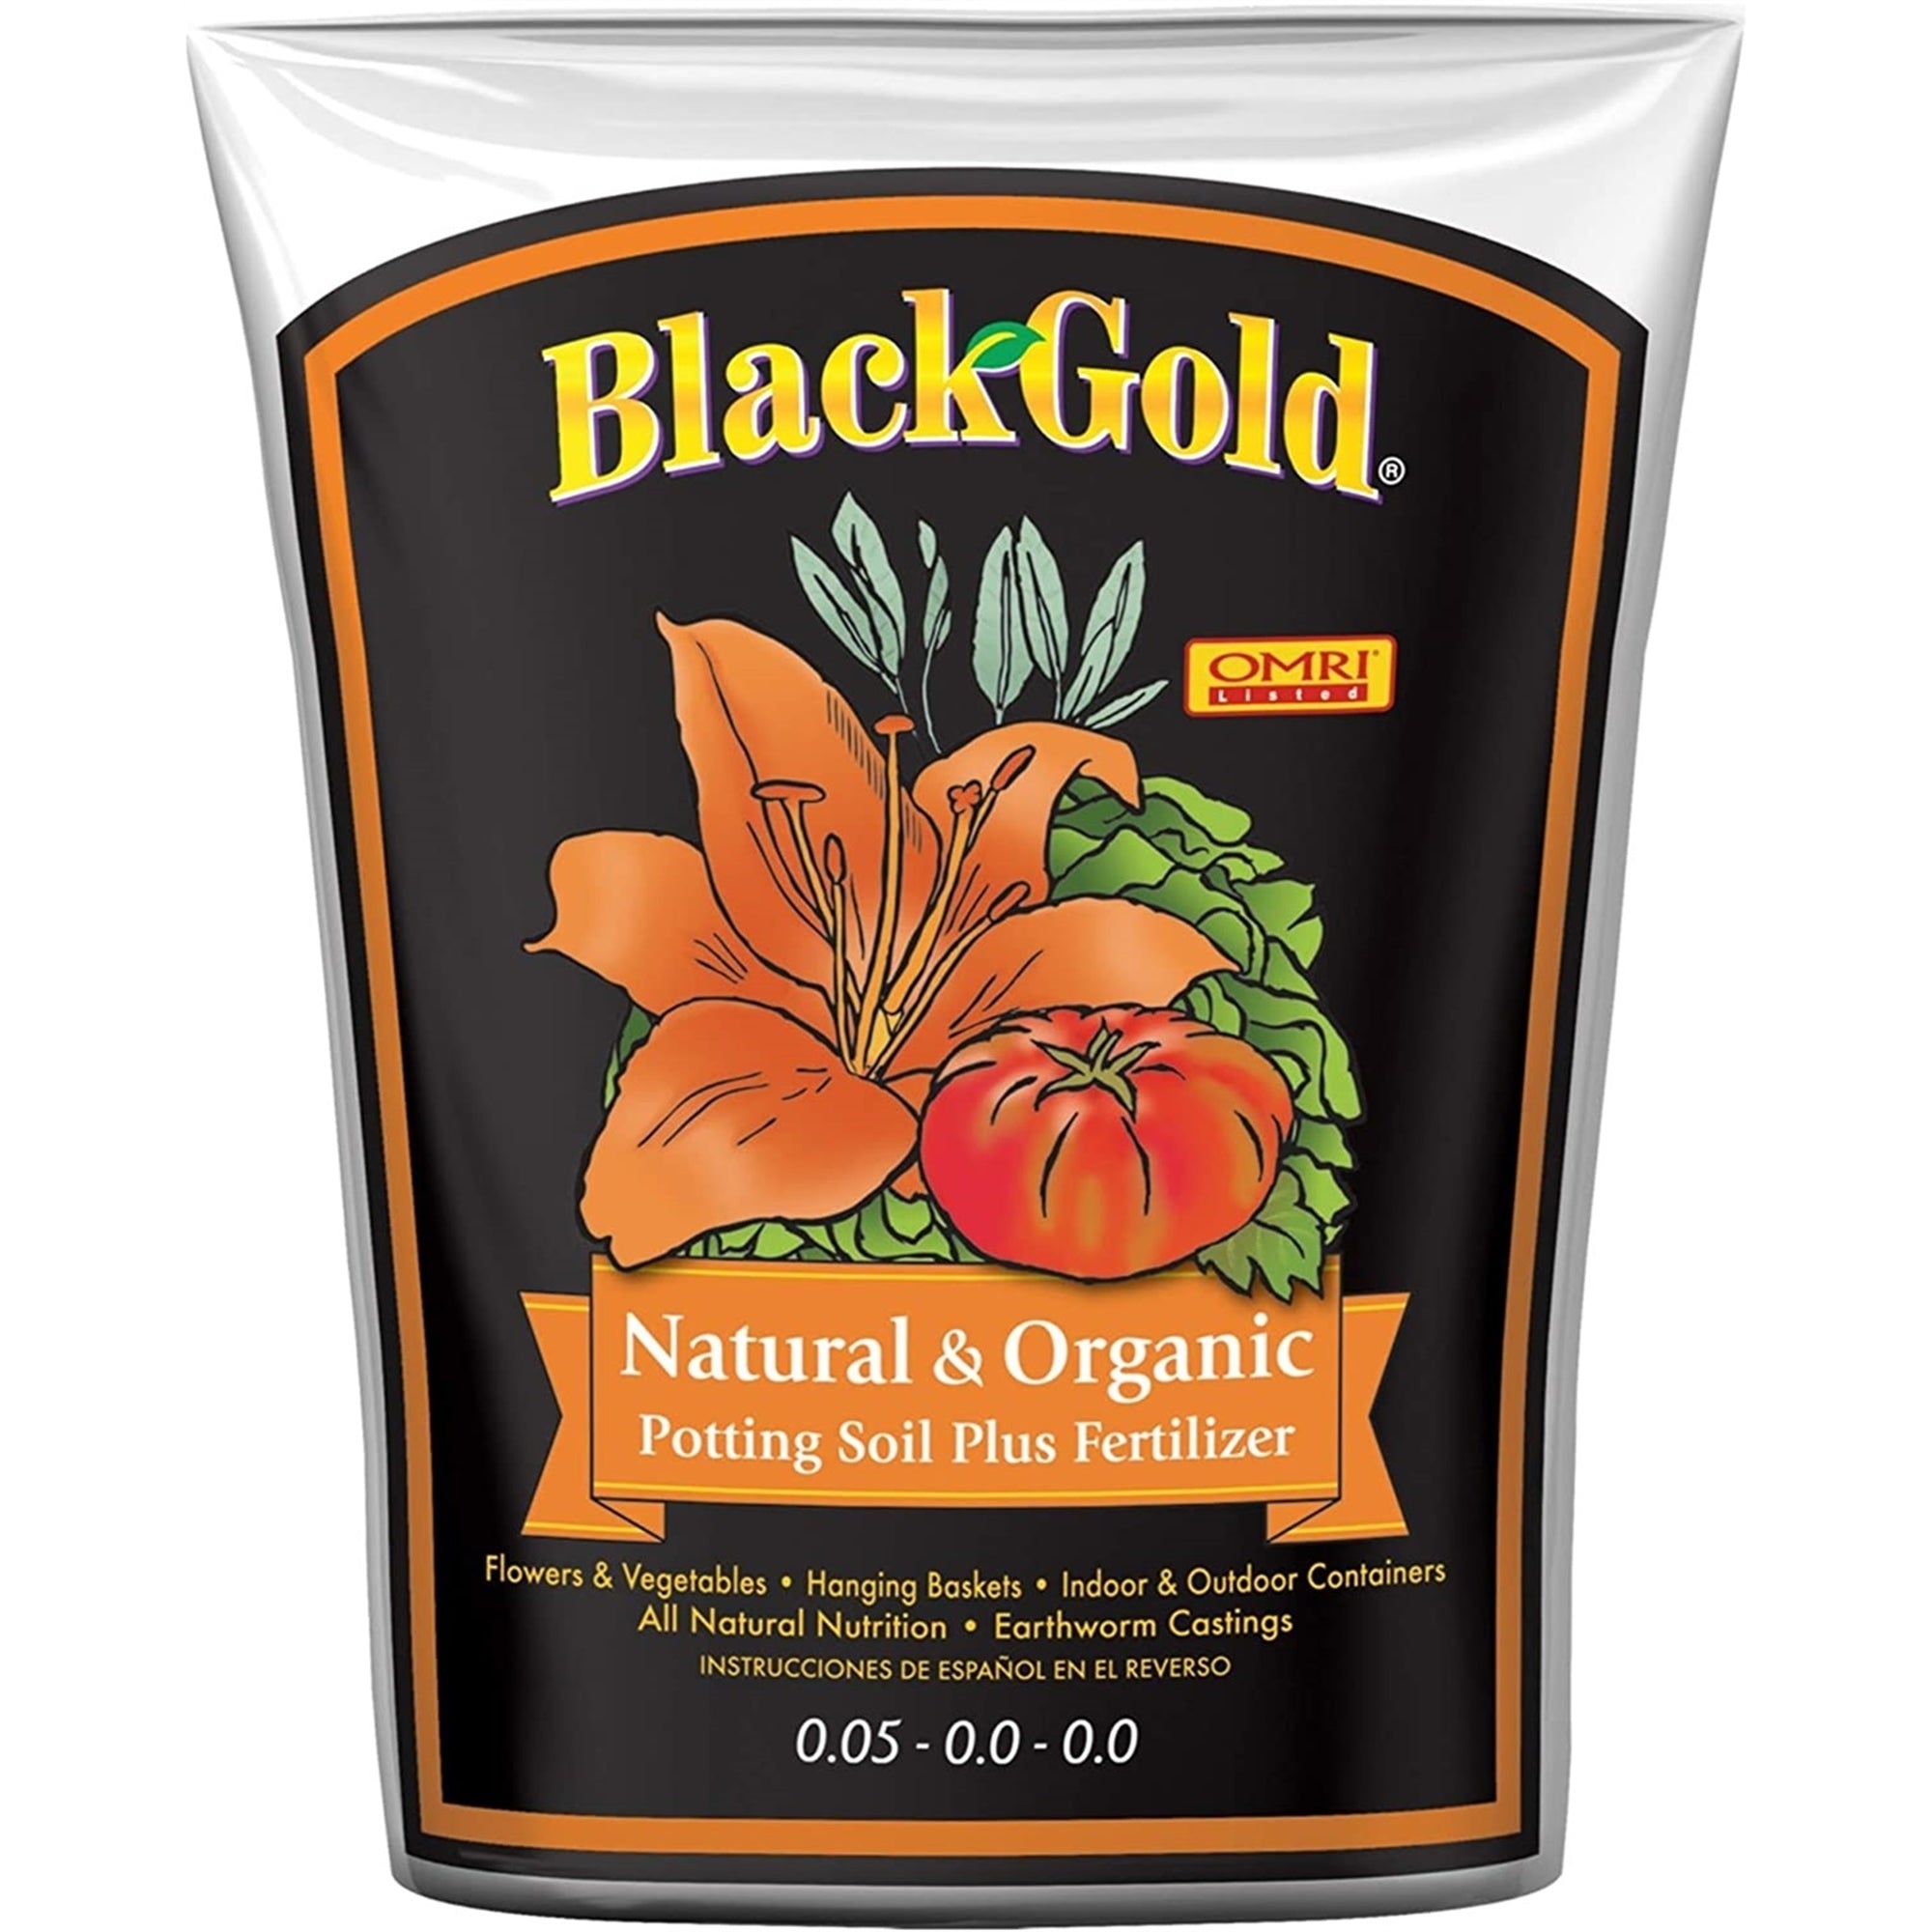 Black Gold Natural and Organic Potting Soil Plus Fertilizer